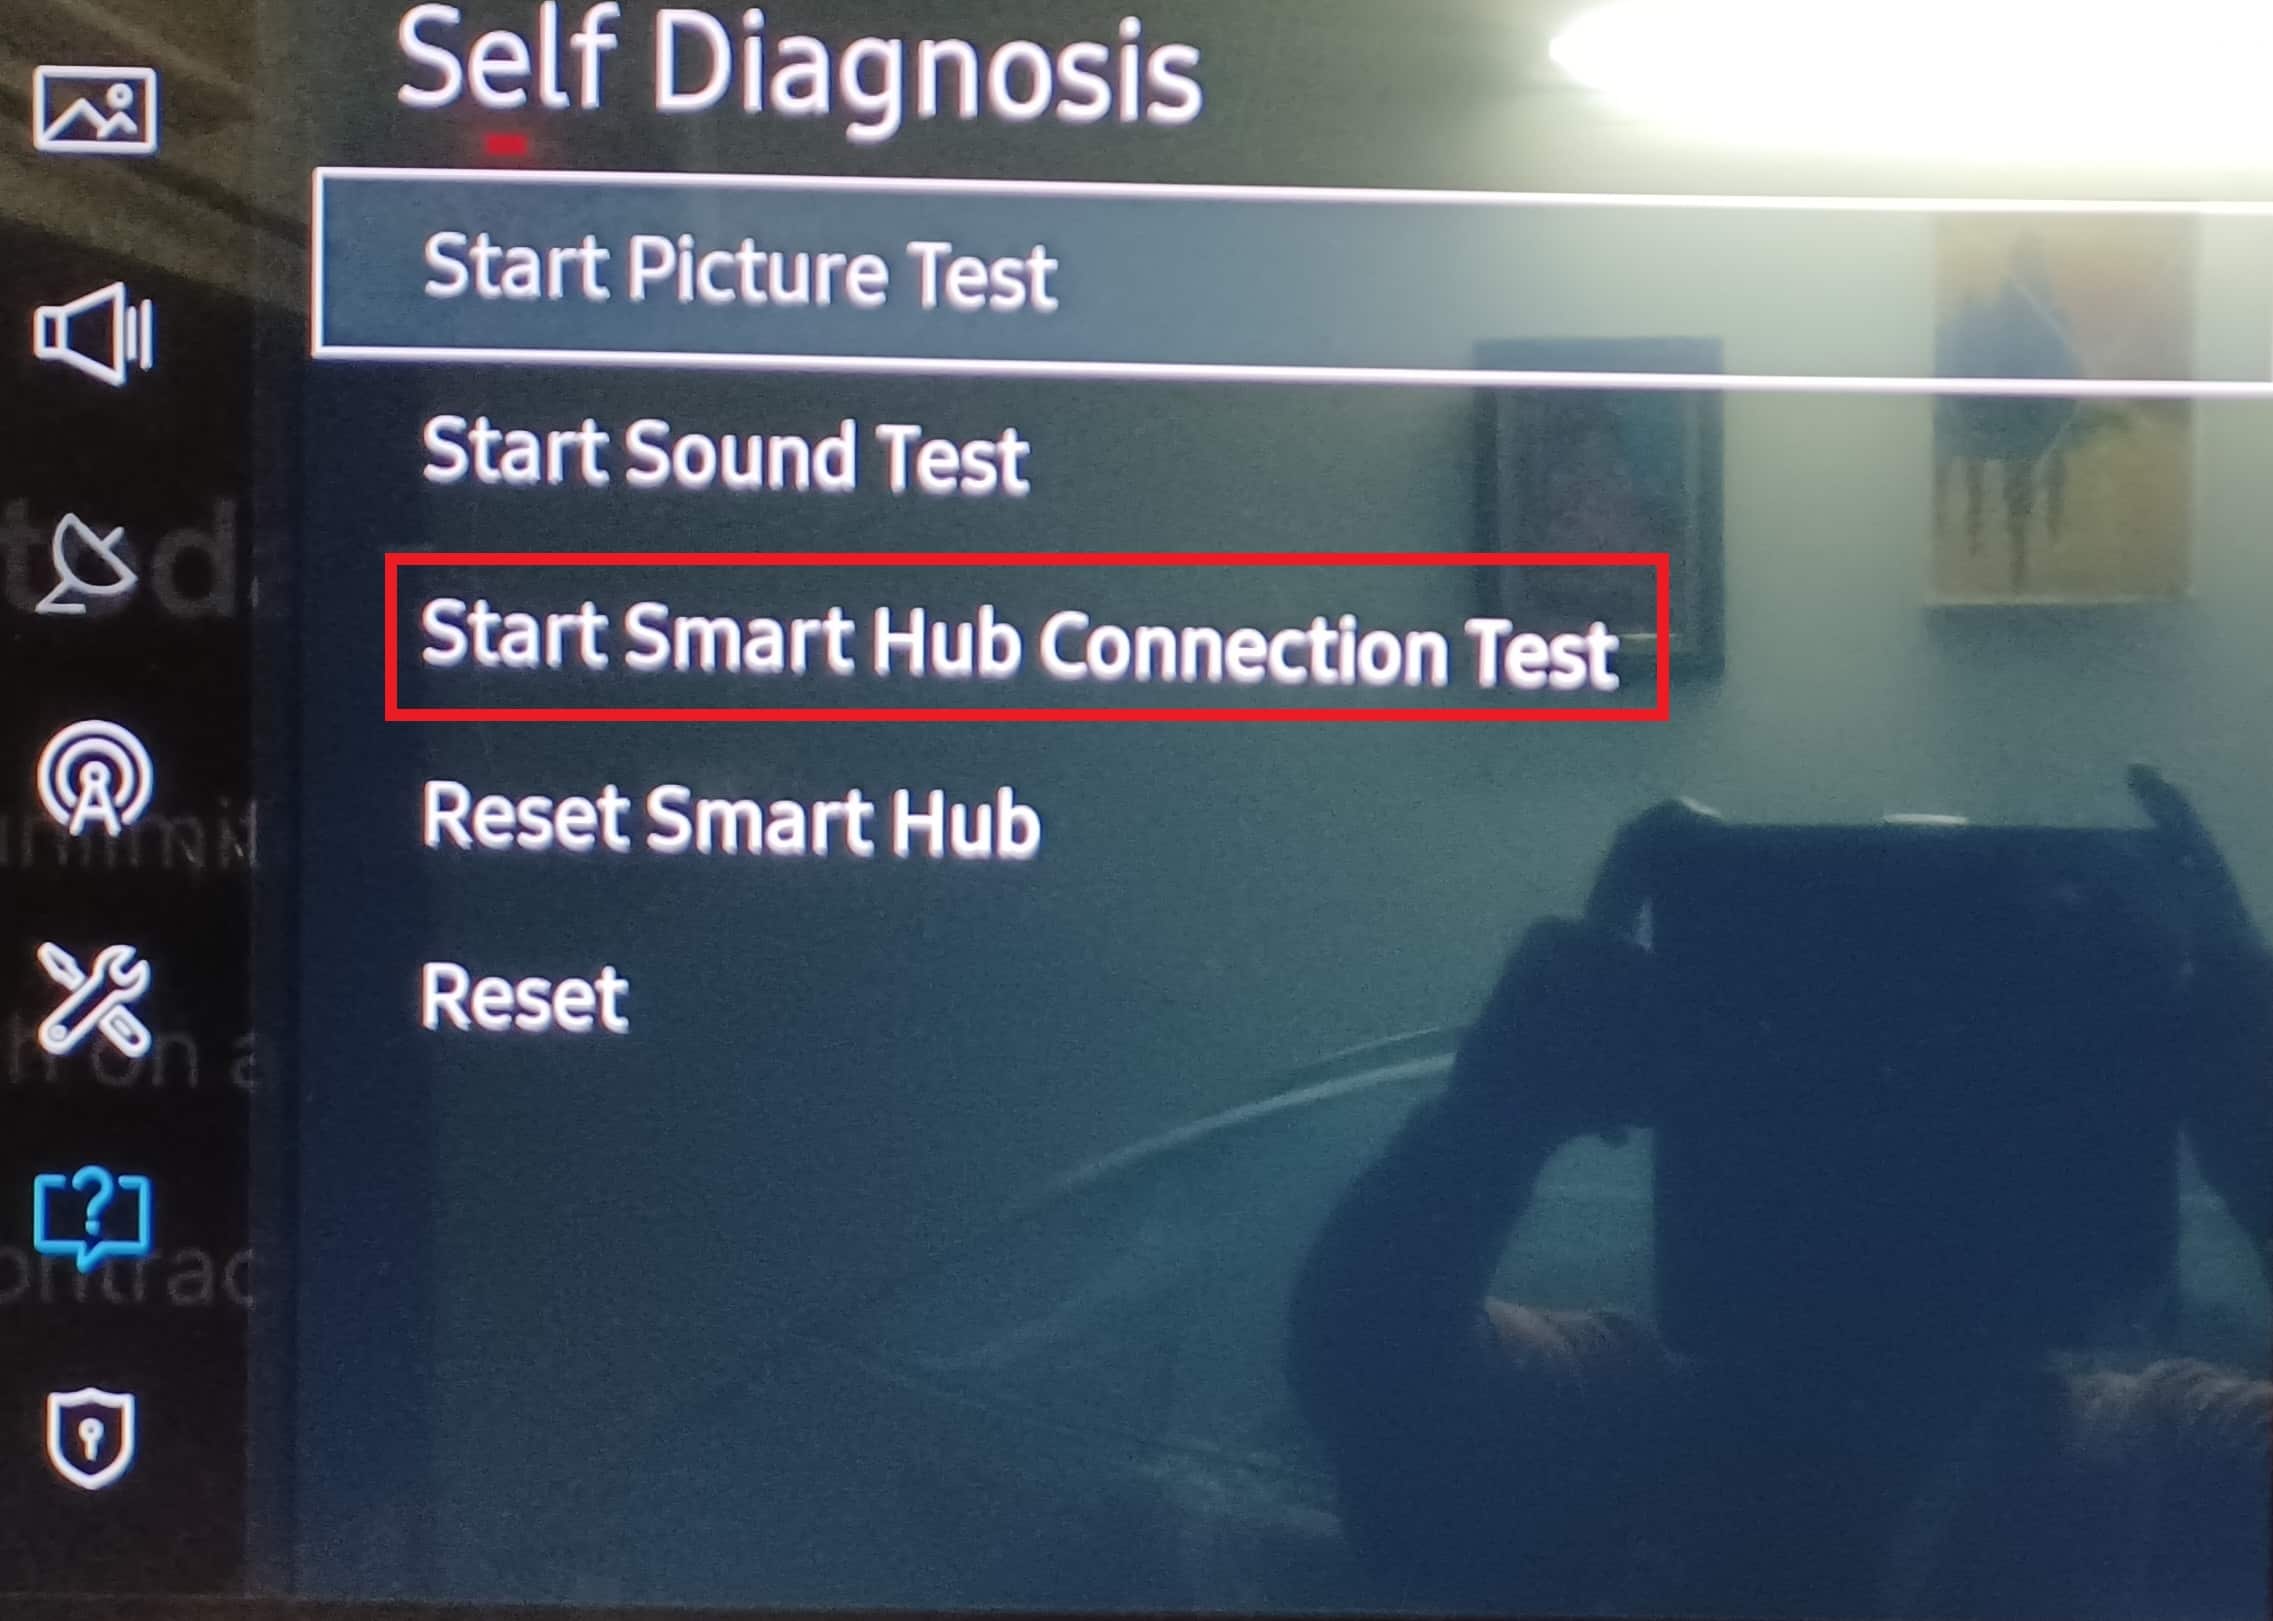 start smart hub connection test